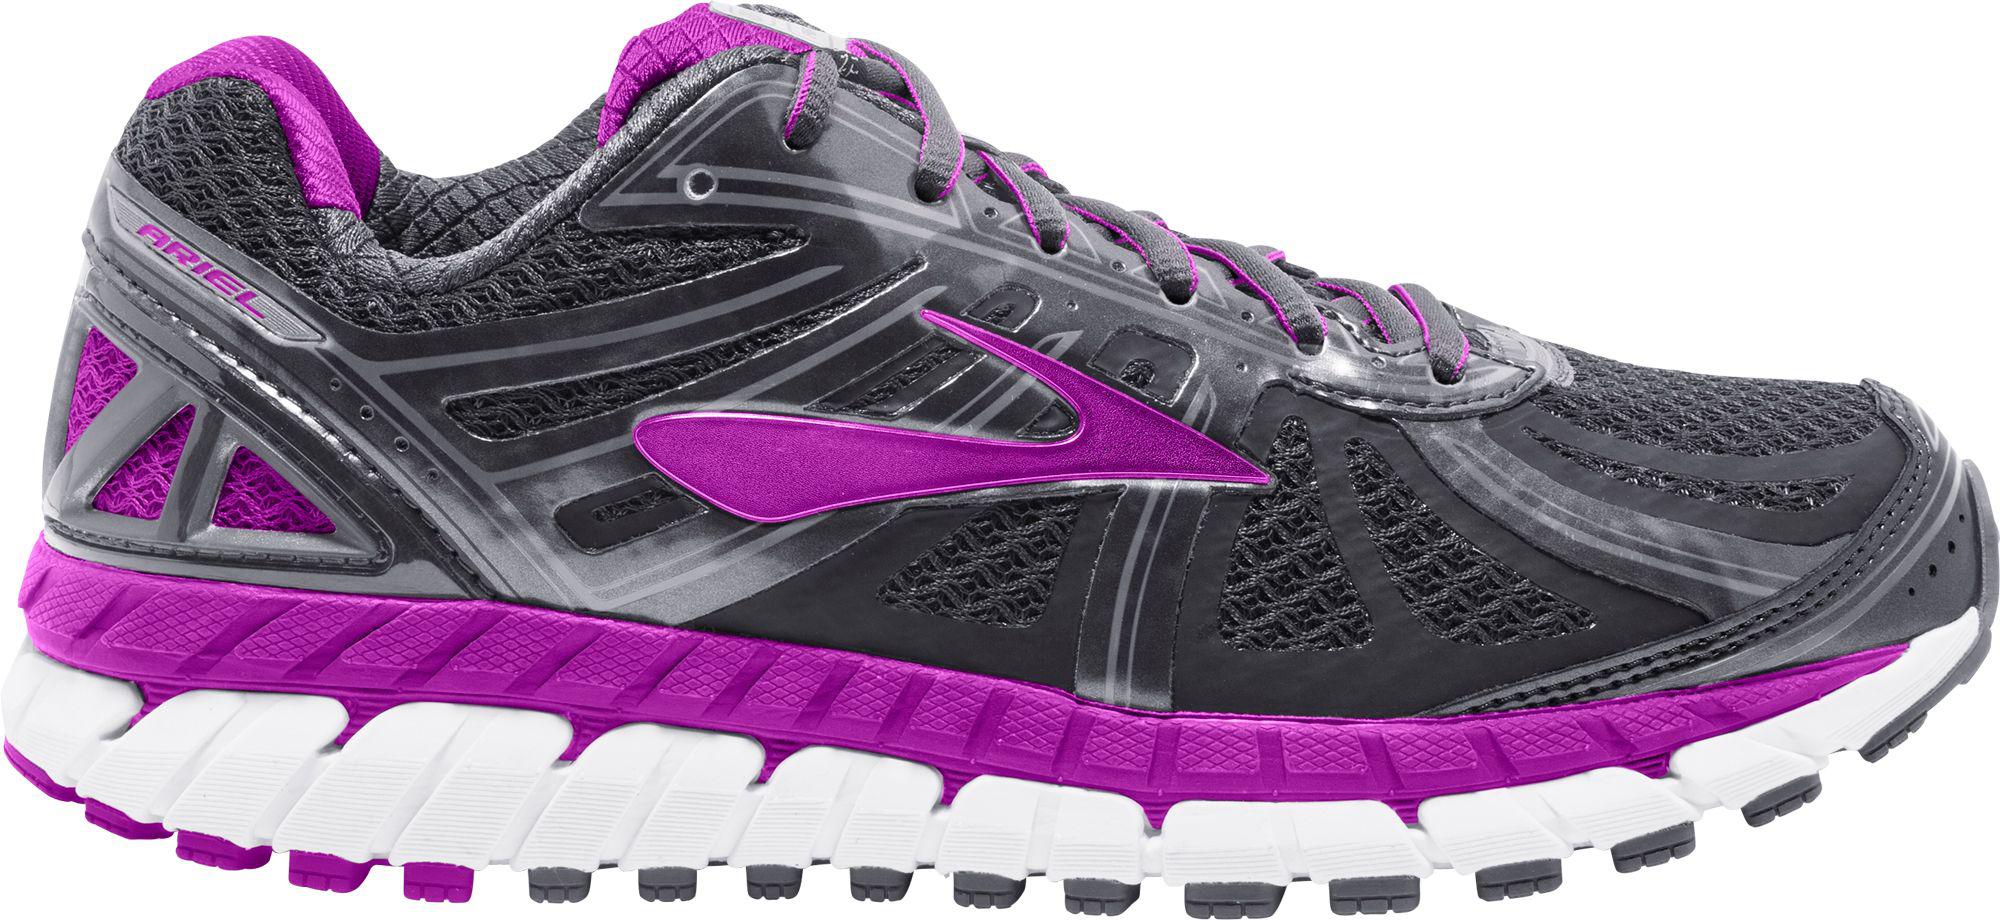 Brooks Ariel 16 Running Shoes in Purple - Lyst